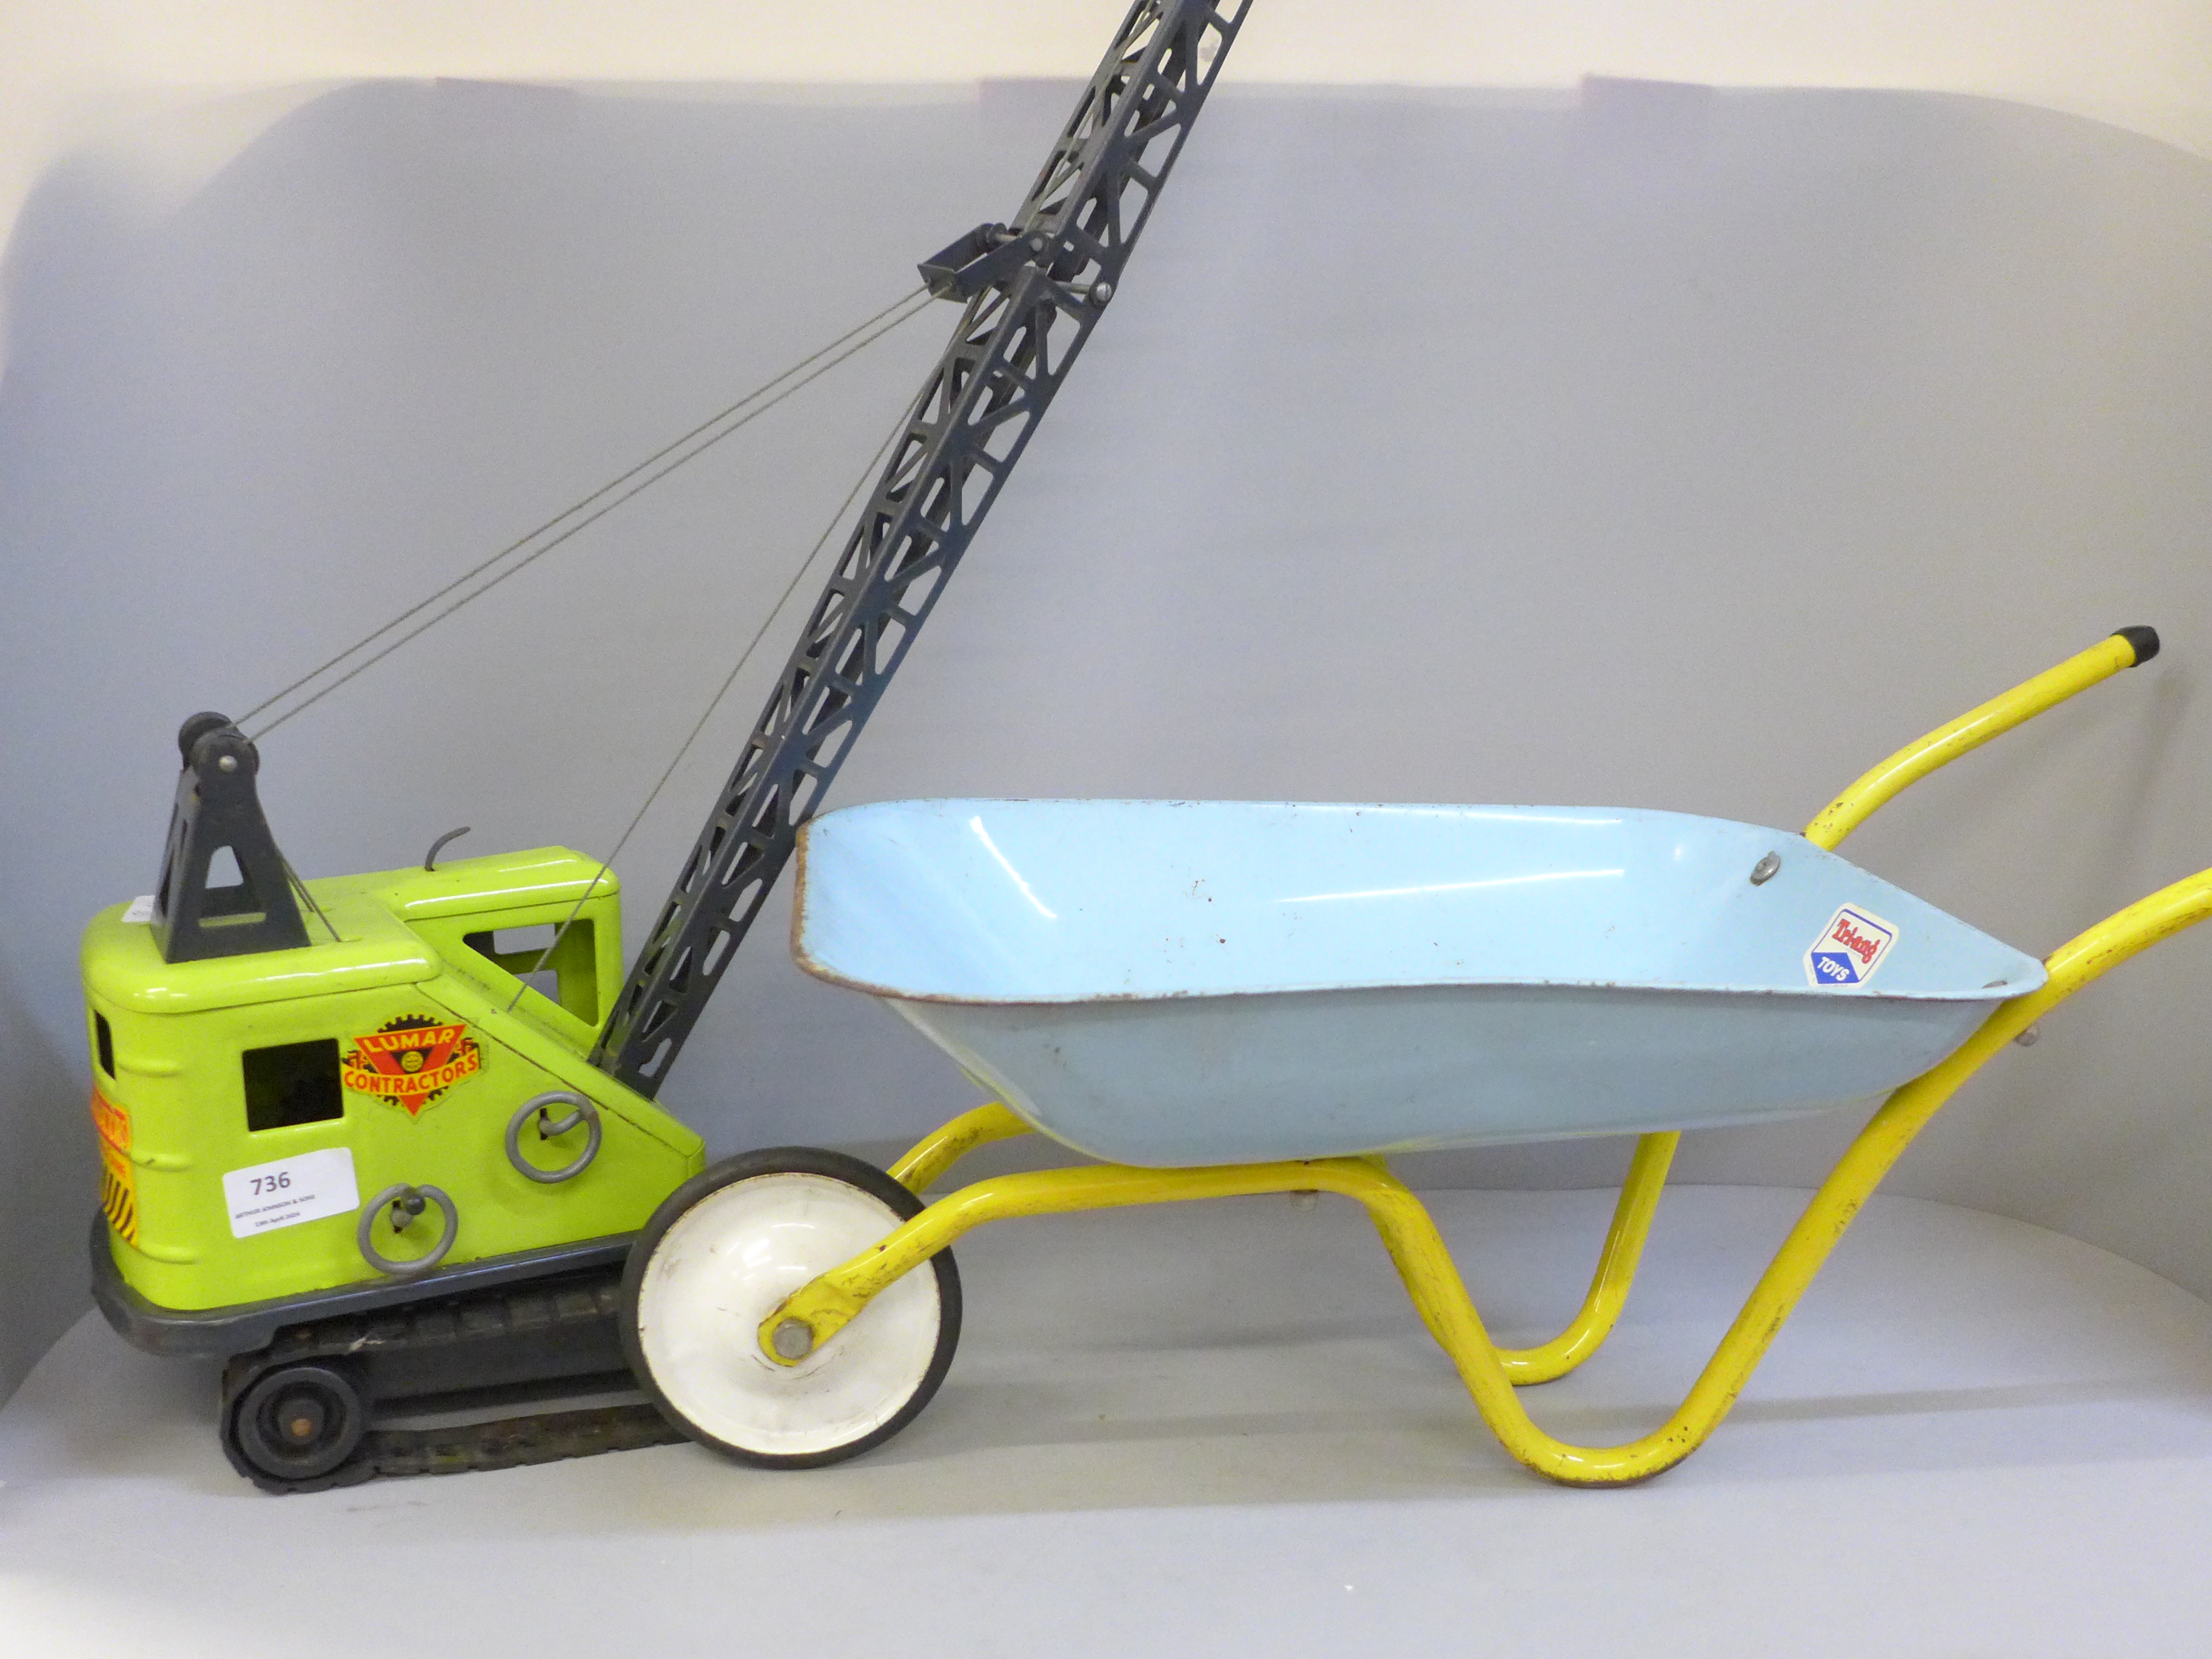 Two pressed metal toys, a Lumar crane and a Tri-ang wheelbarrow